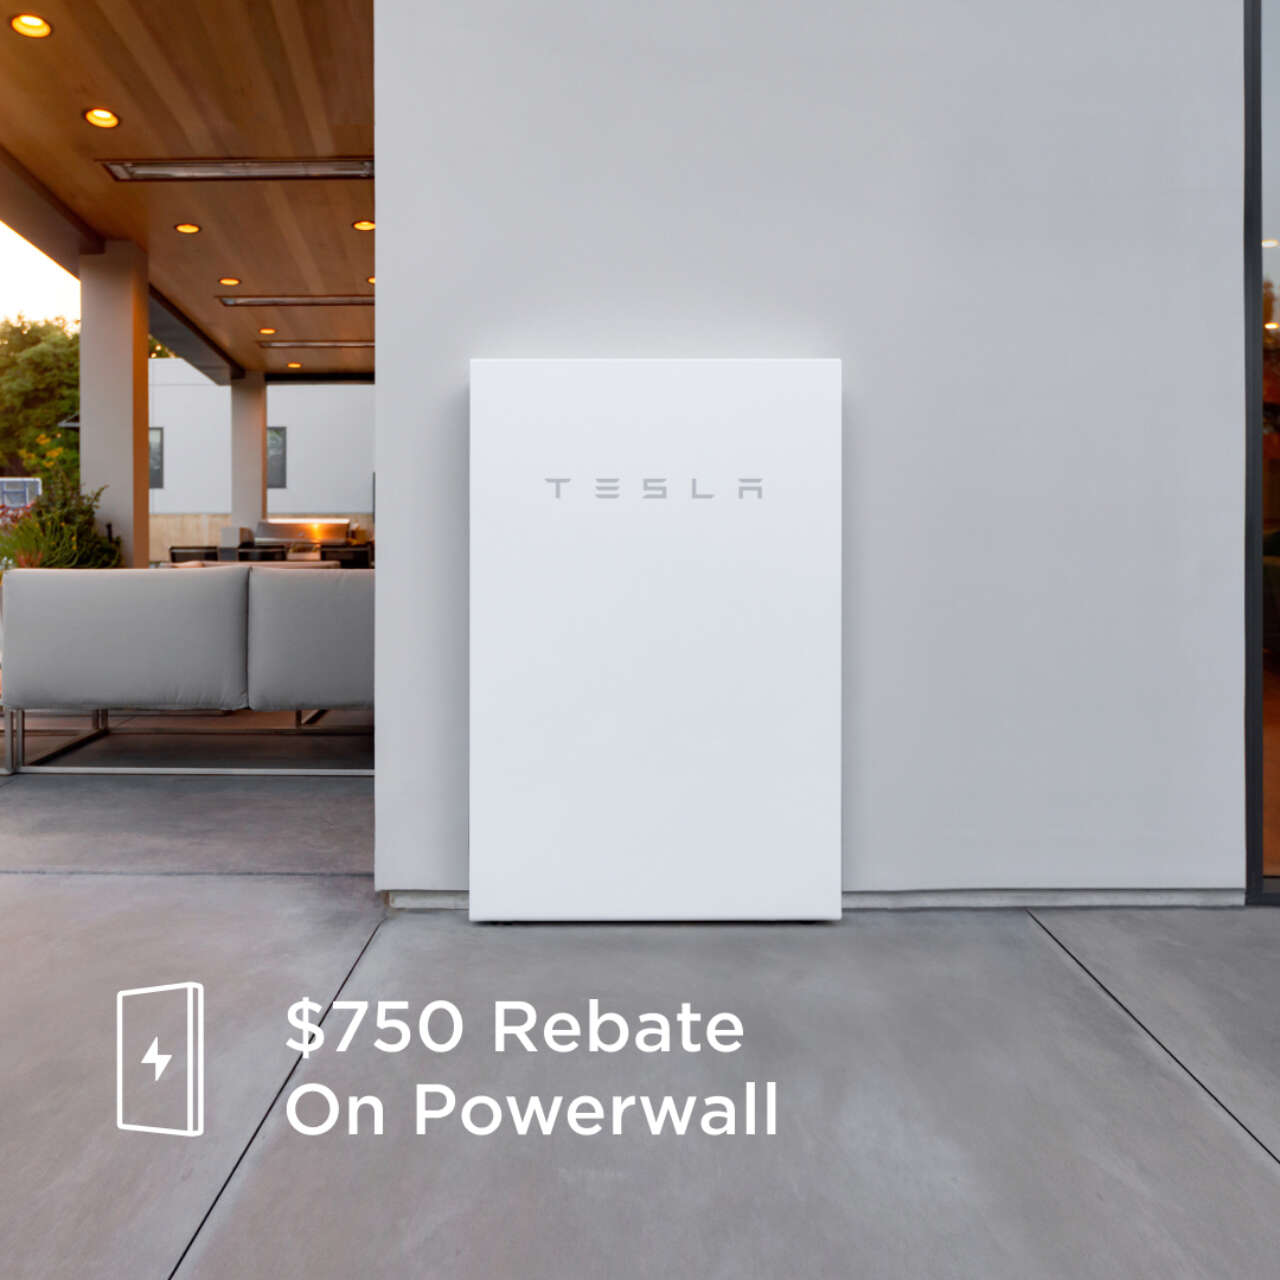 Get a $750 Rebate on a new Tesla Powerwall